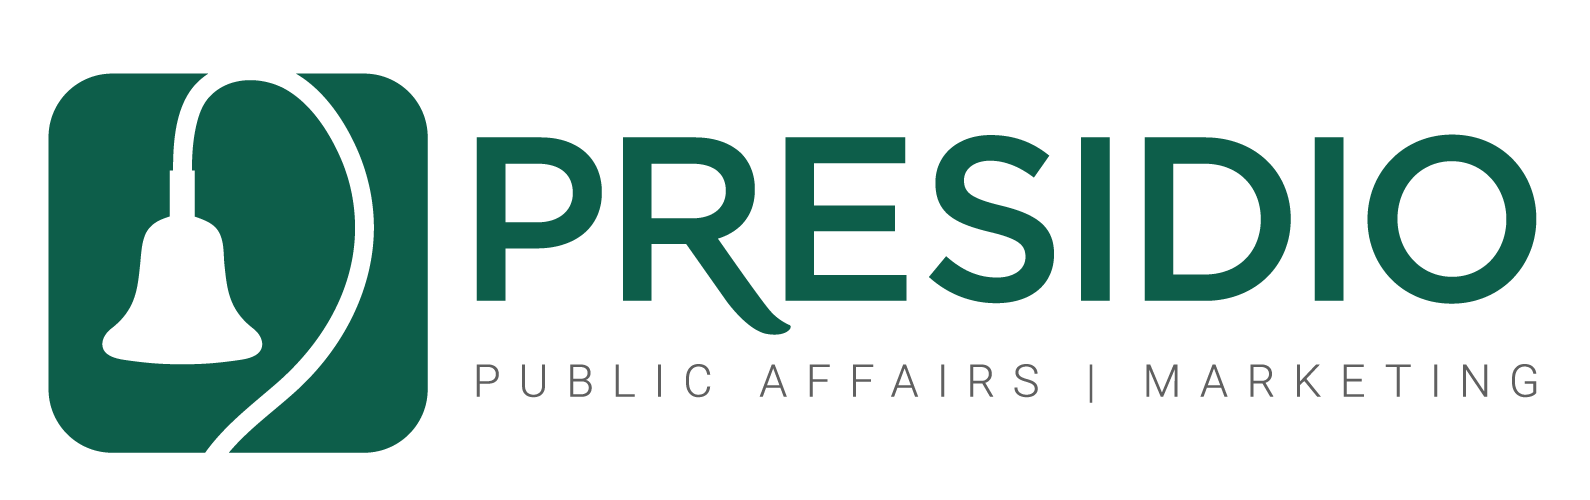 Presidio logo - Public Affairs & Marketing